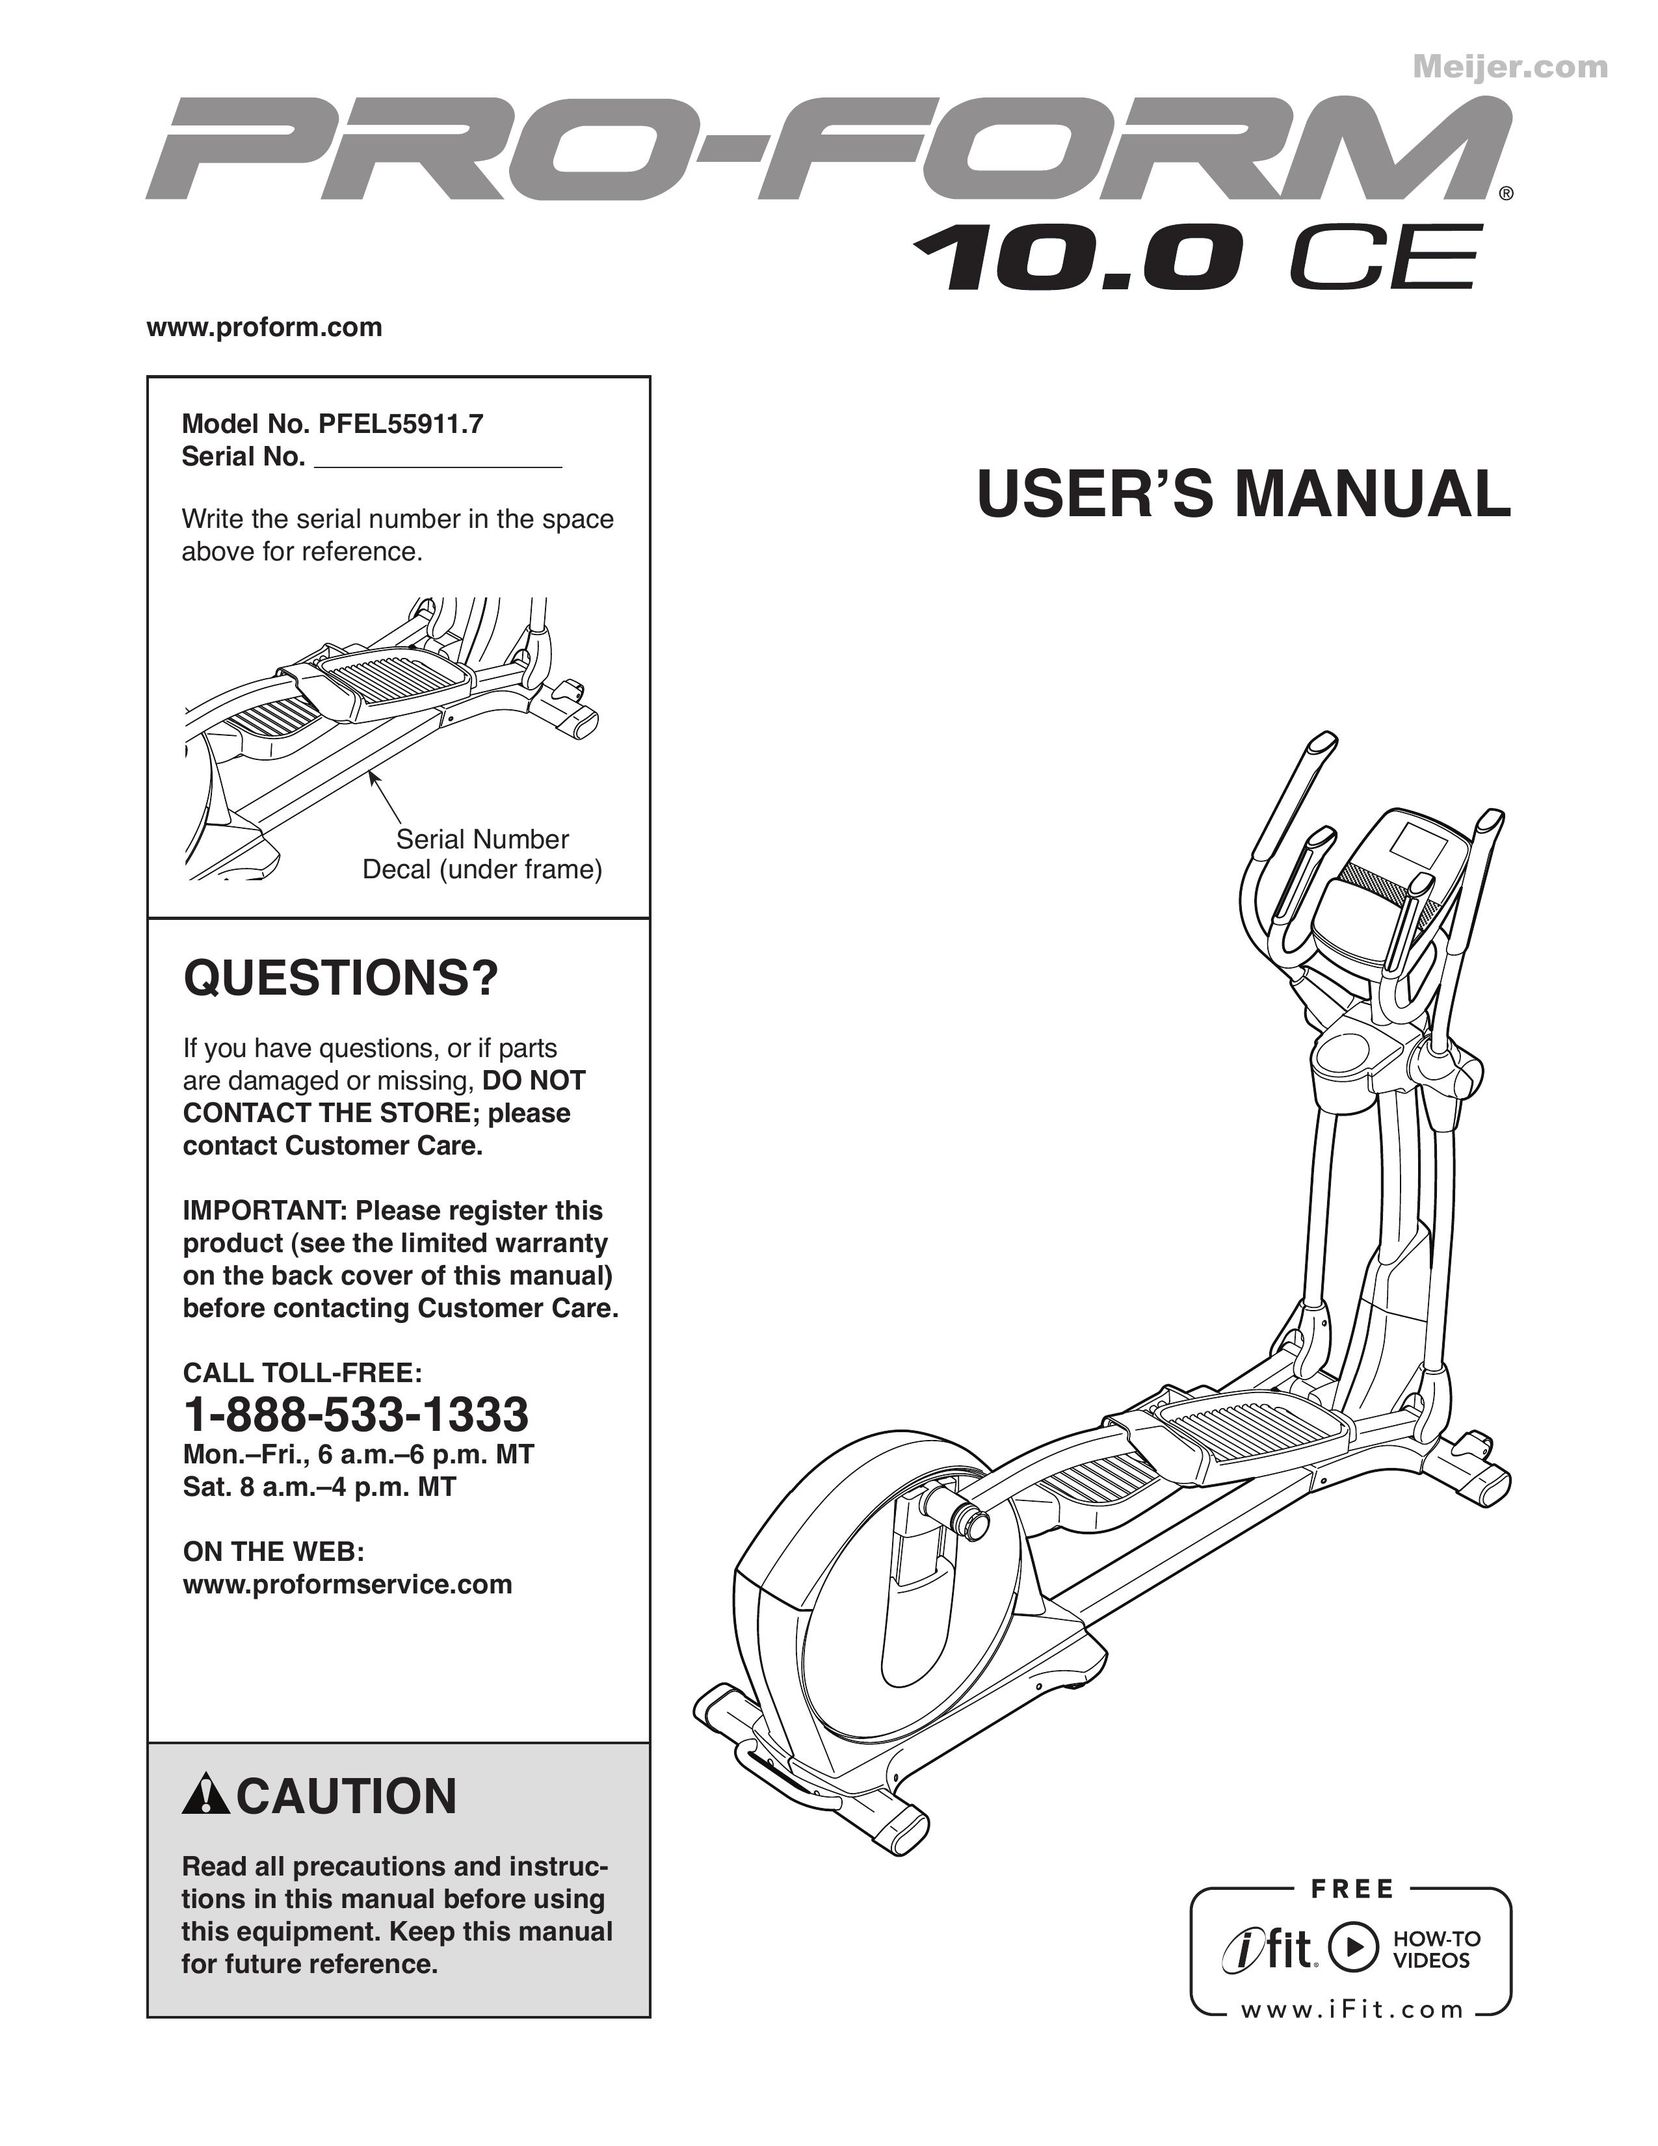 ProForm PFEL55911.7 Stepper Machine User Manual